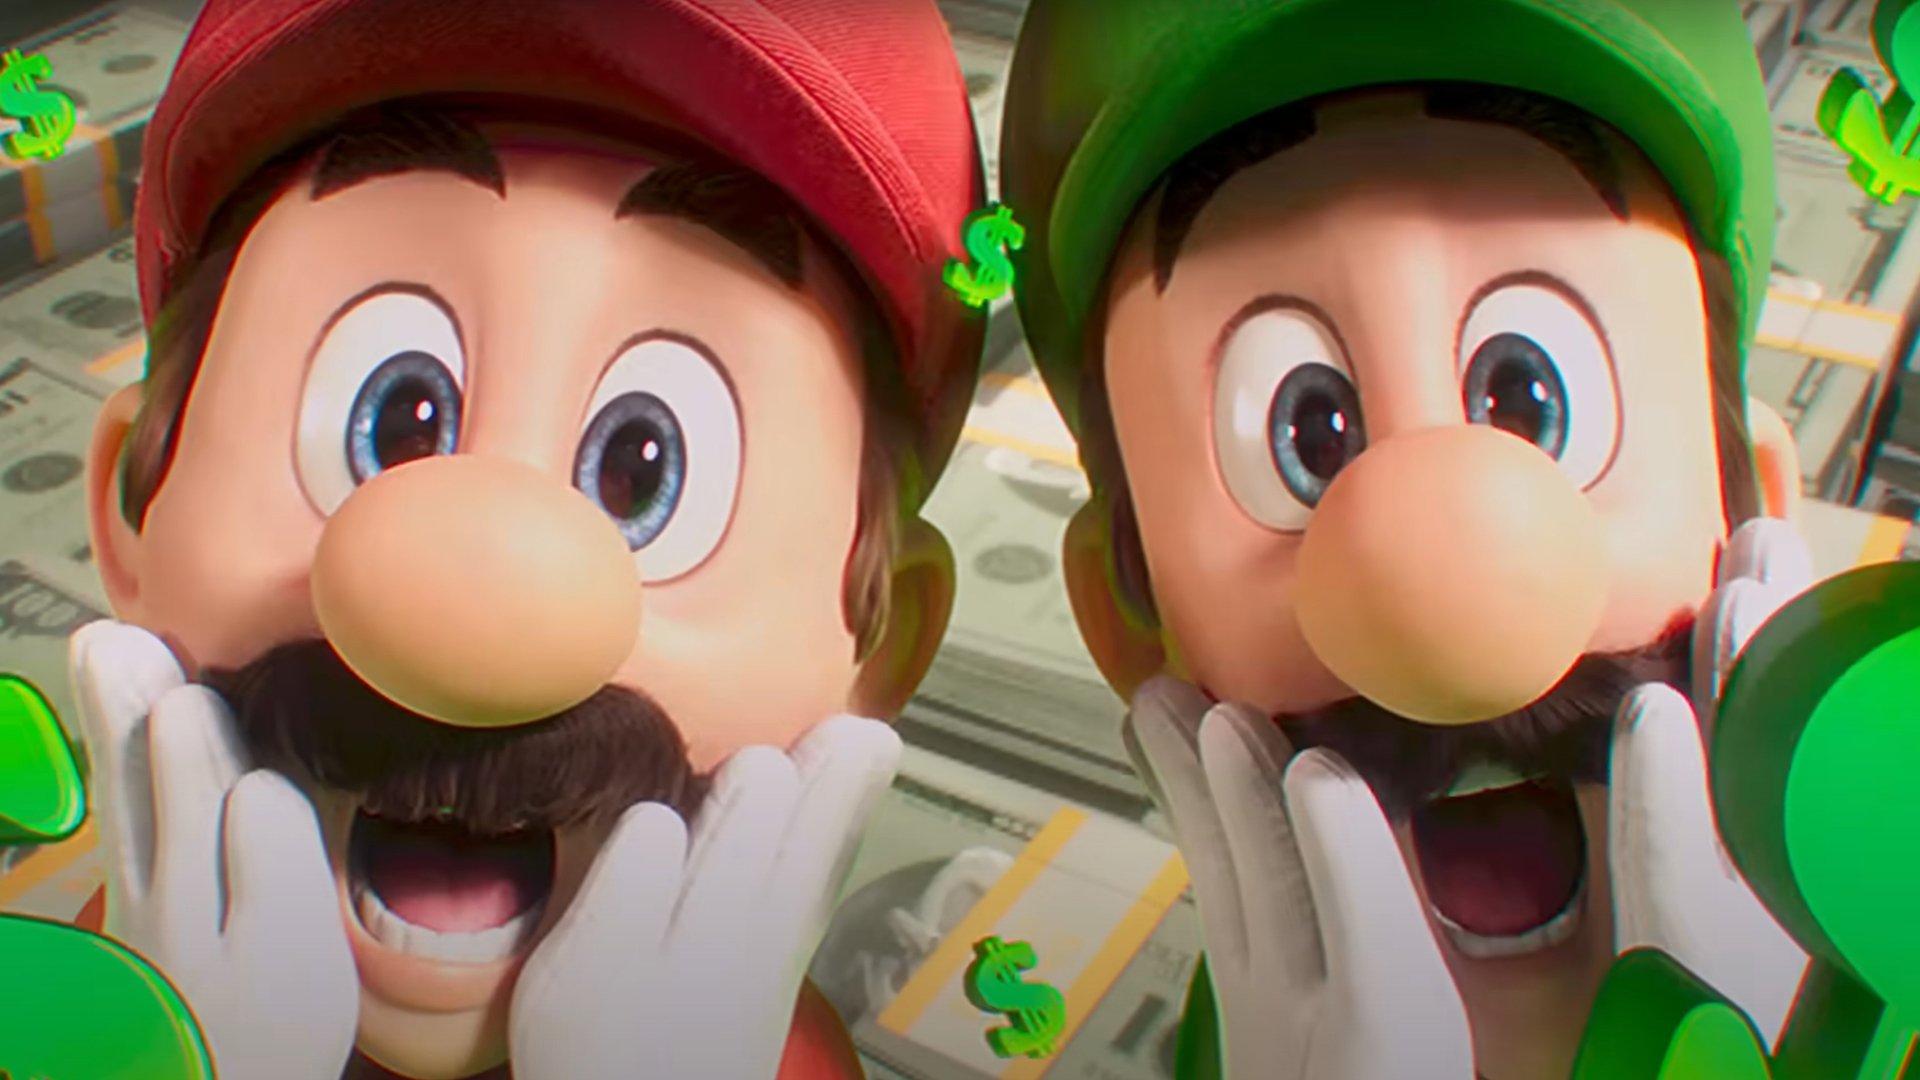 Fans are loving Mario's new voice in upcoming 'Super Mario Bros. Wonder